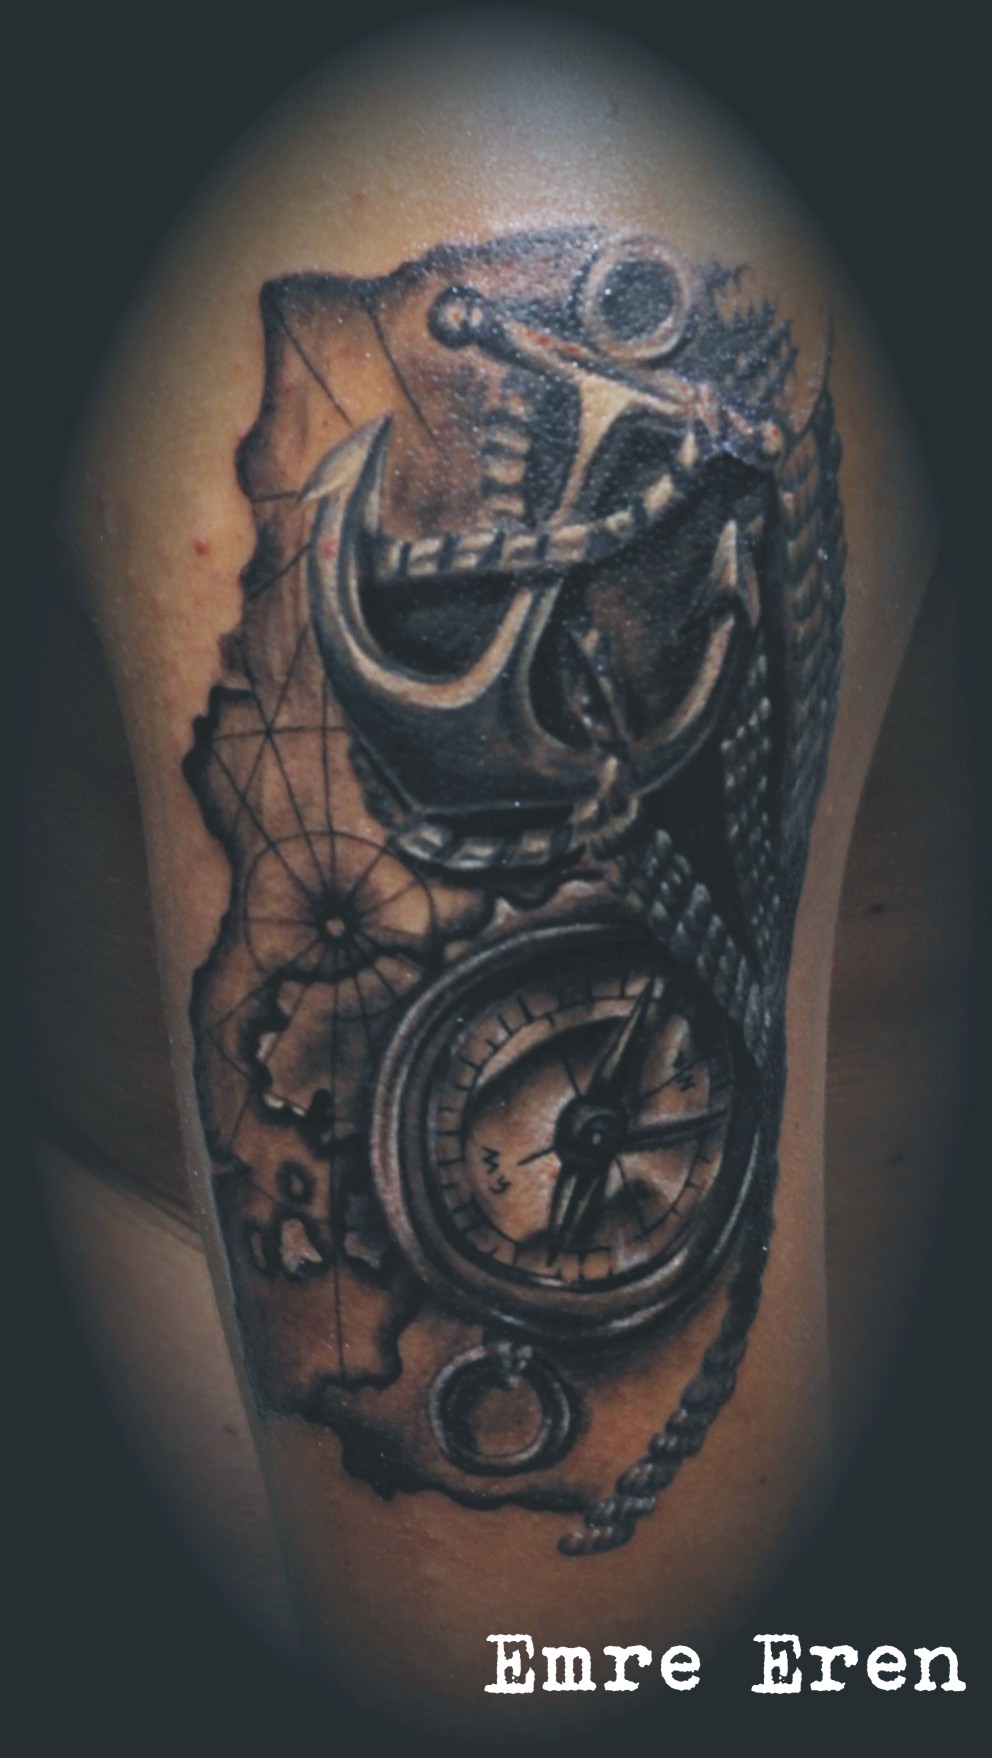 anchor rope compass tattoo by TattnRoll on DeviantArt